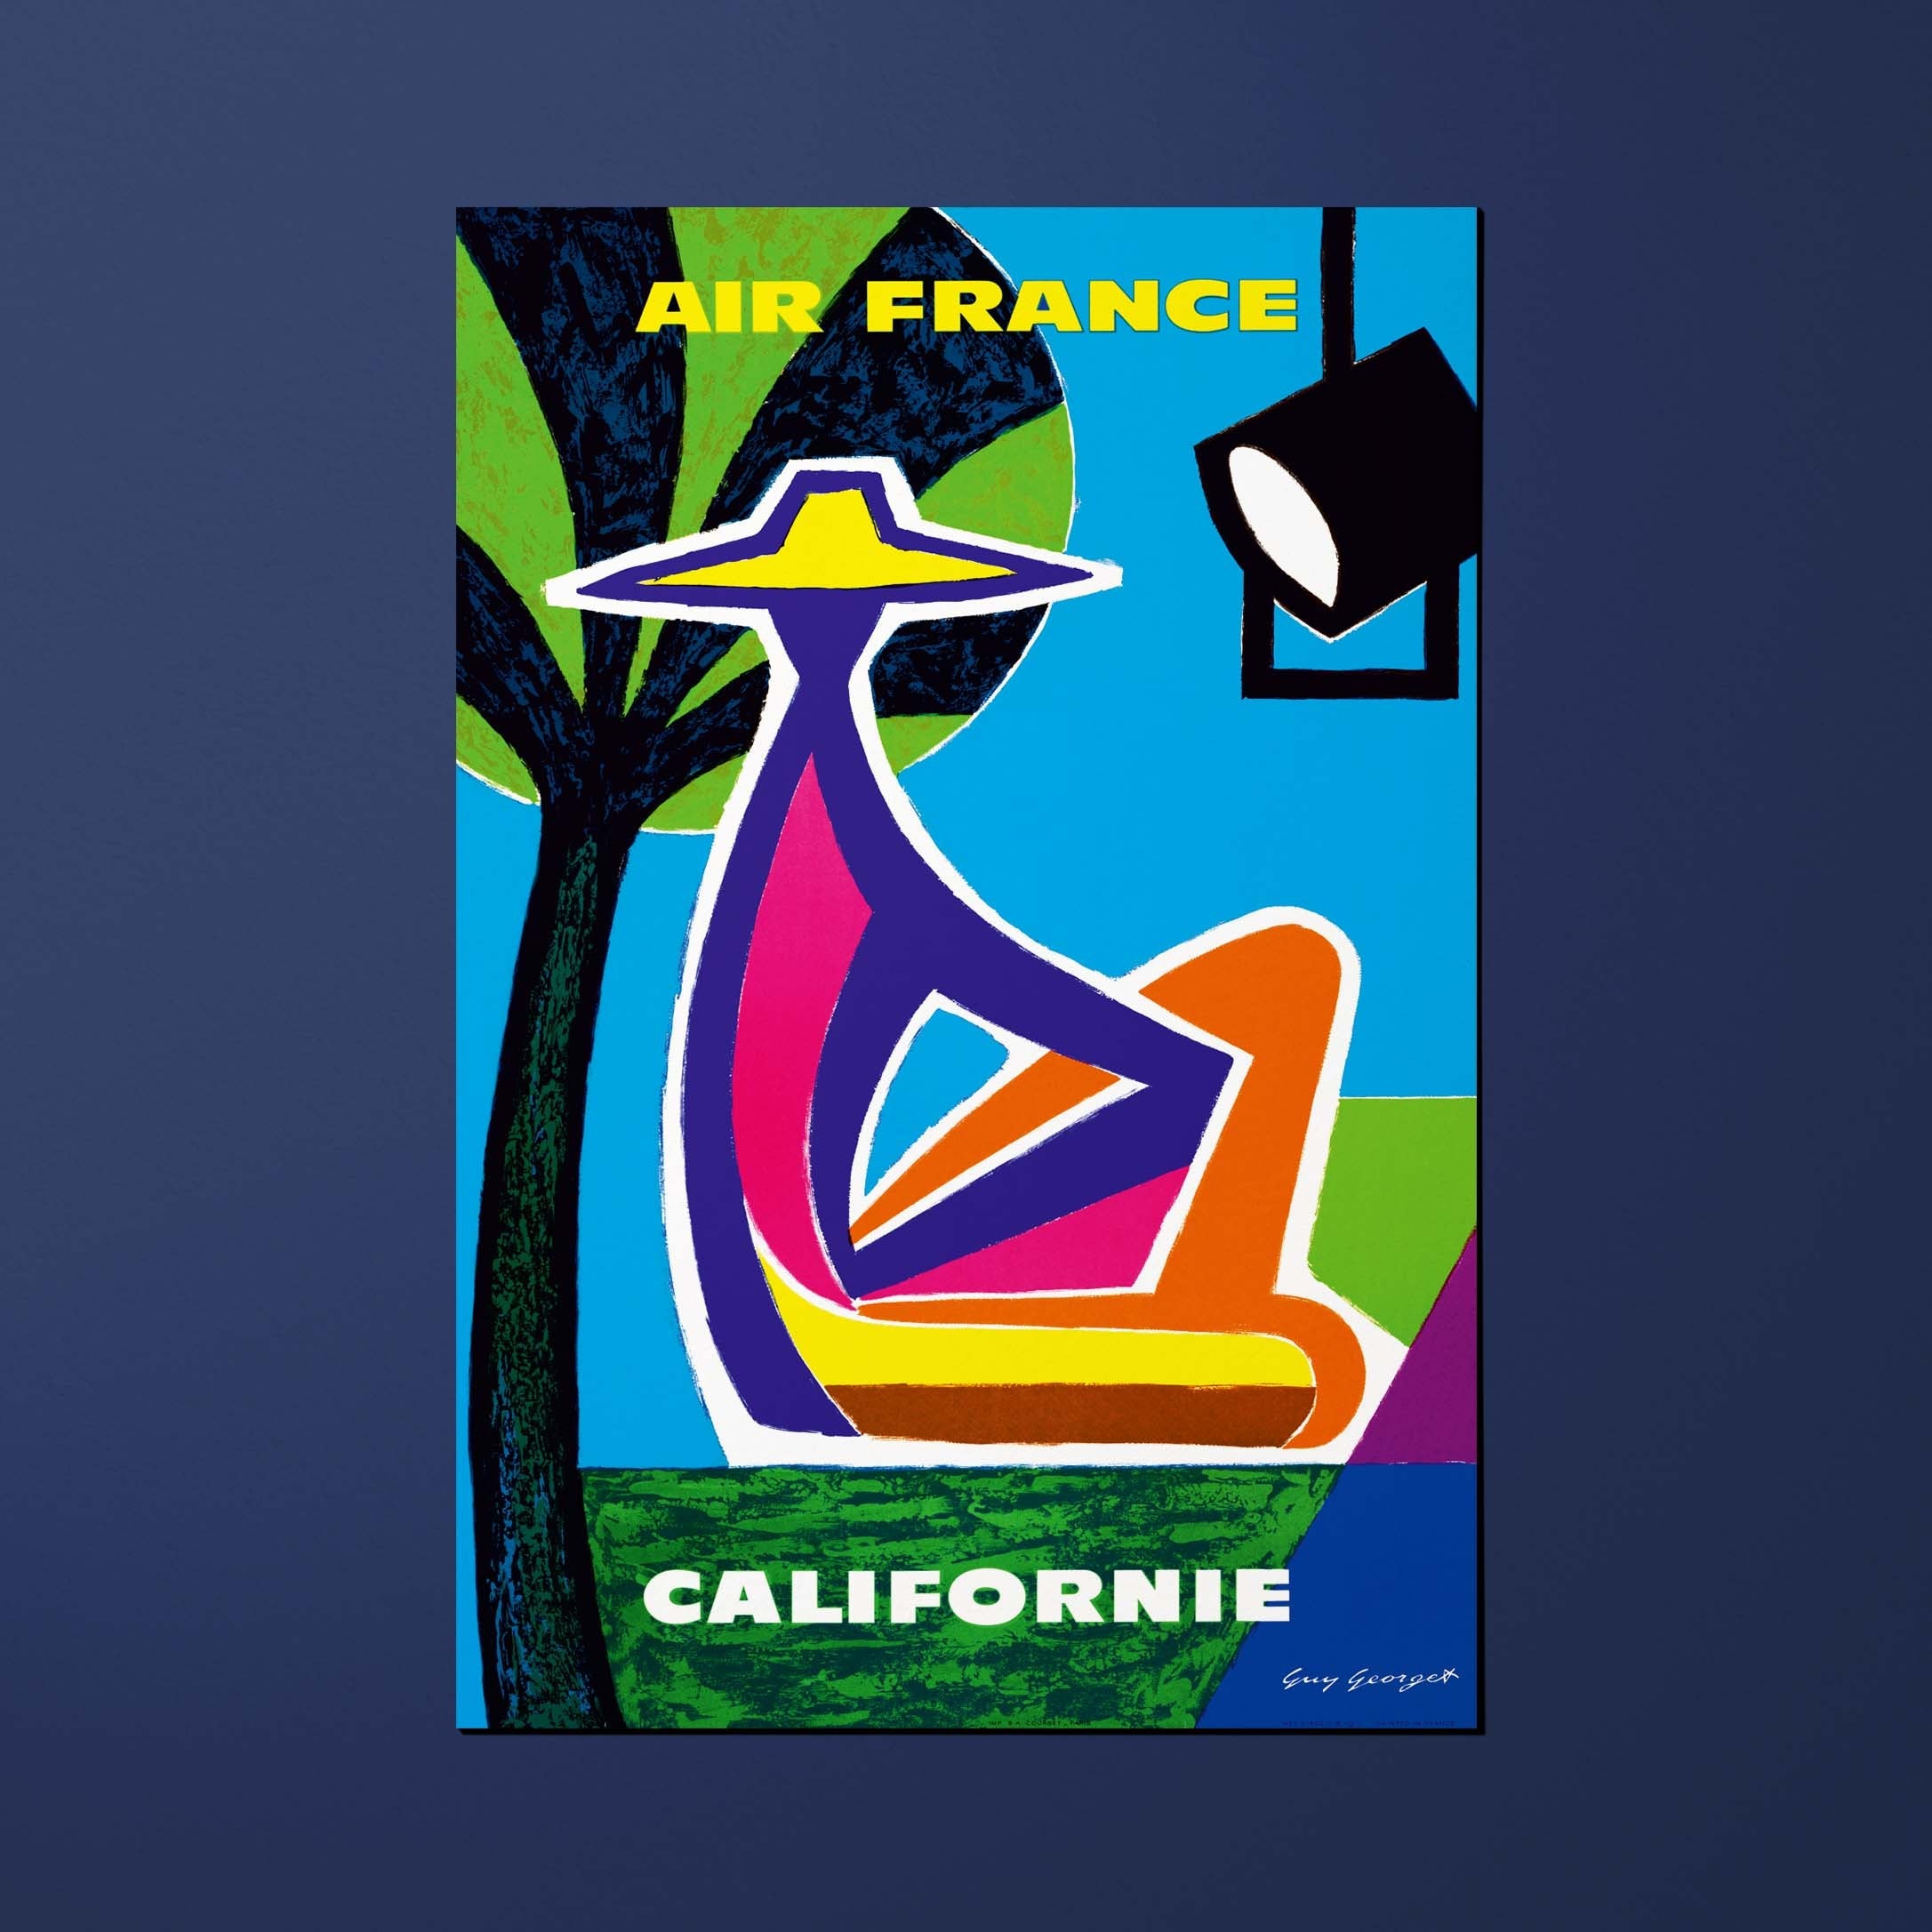 Air France Legend California postcard, cinema spot